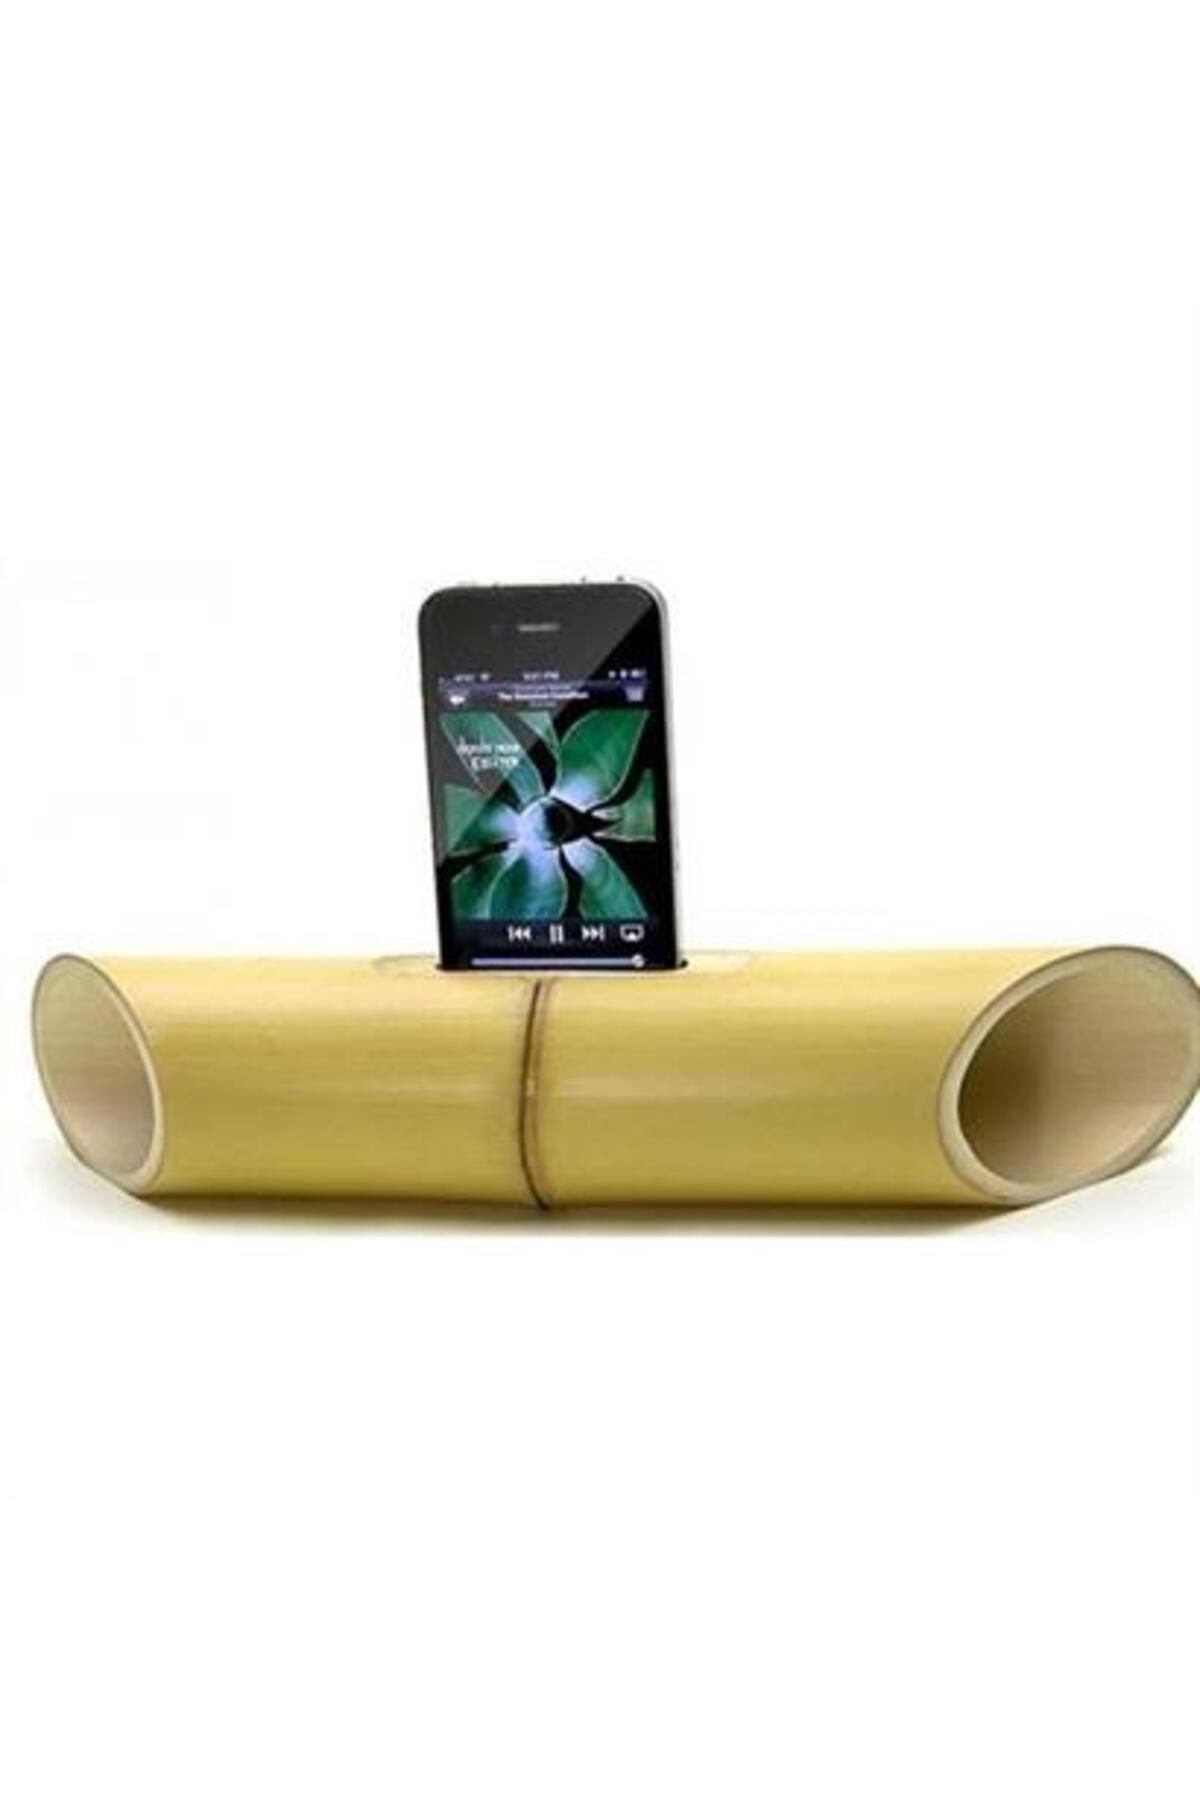 ACSMarket 6 x 1 cm Girişli Kılıflı Bambu Ağacı Akustik Ses Yükseltici Aparat